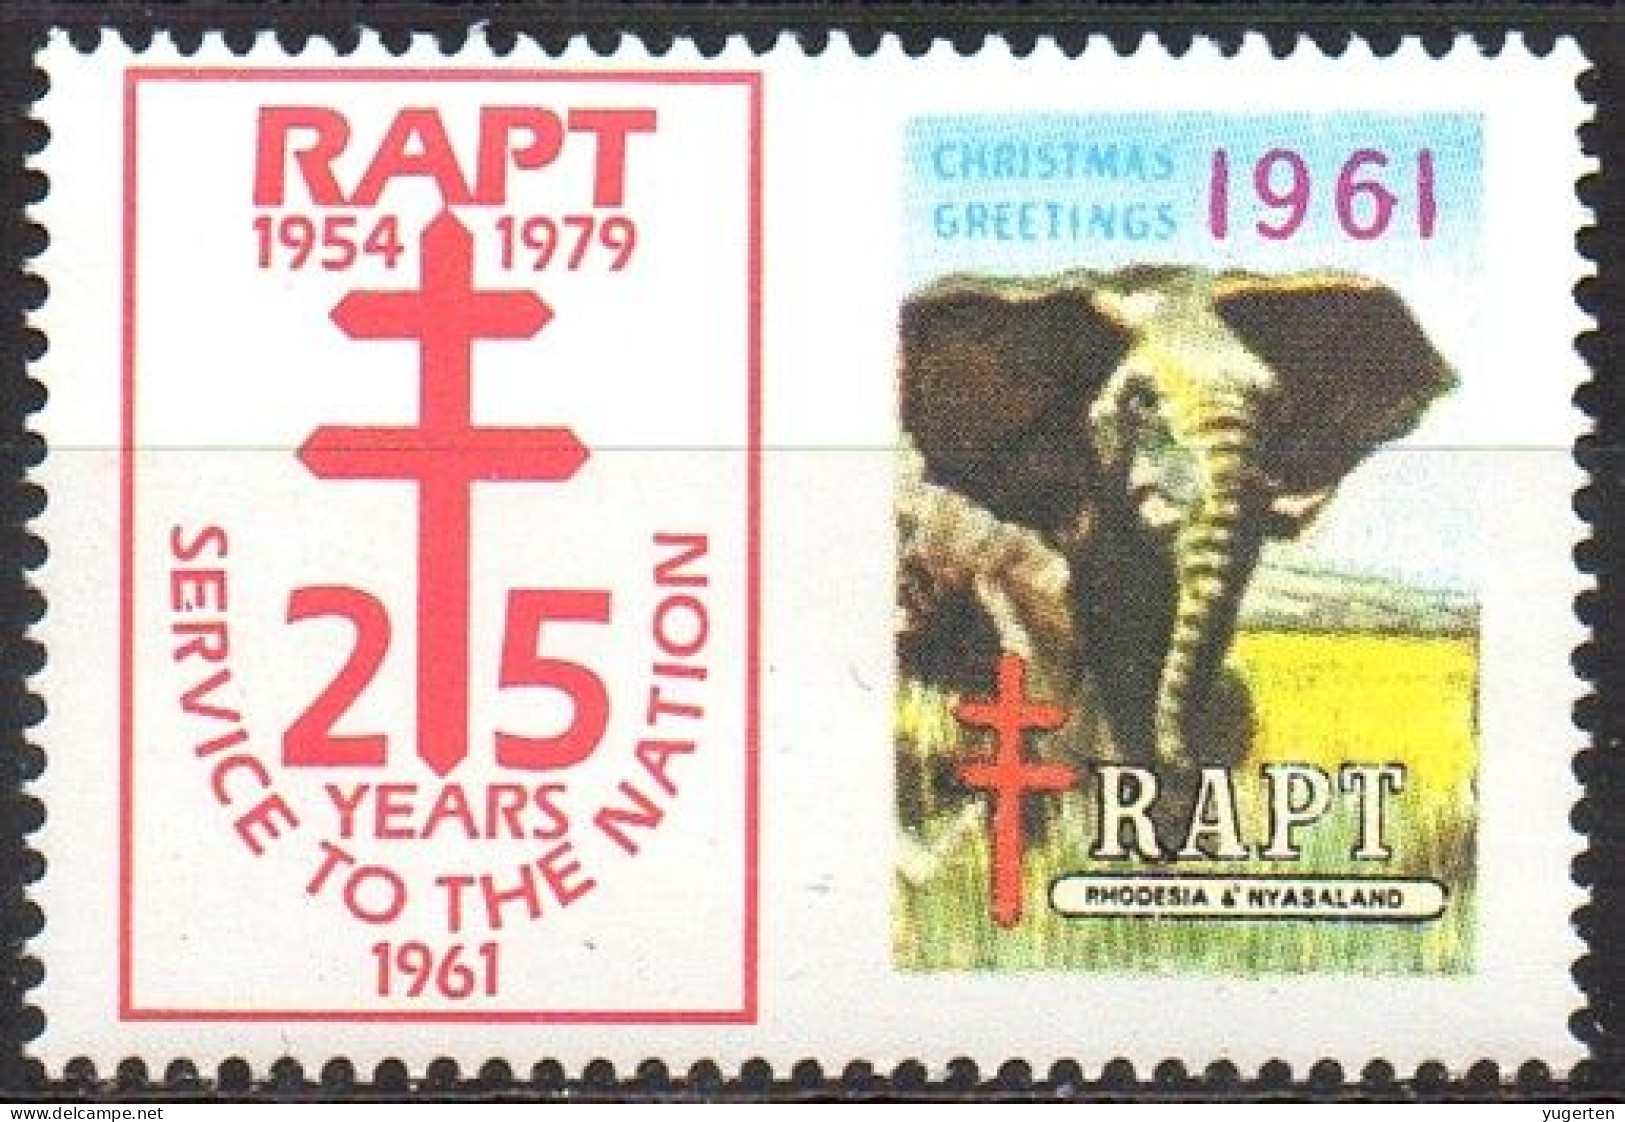 RODHESIA 1961 - Label - Local Post - RAPT - Elephants  Elephants Elefanten Elefantes Elefanti Fauna Animals Mammals - Olifanten